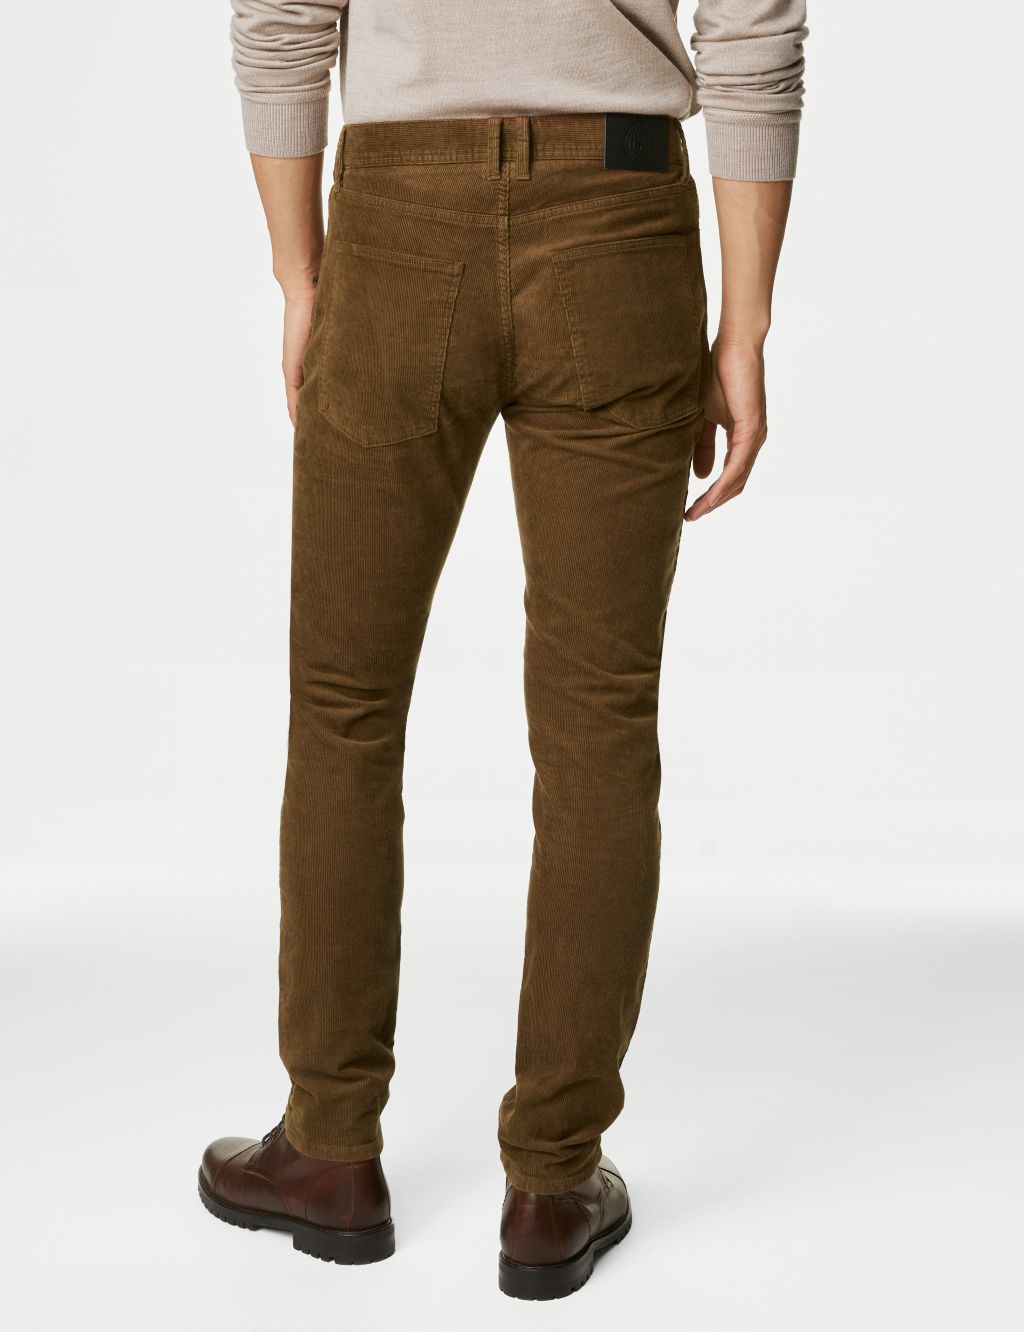 Slim Fit Corduroy 5 Pocket Trousers image 5